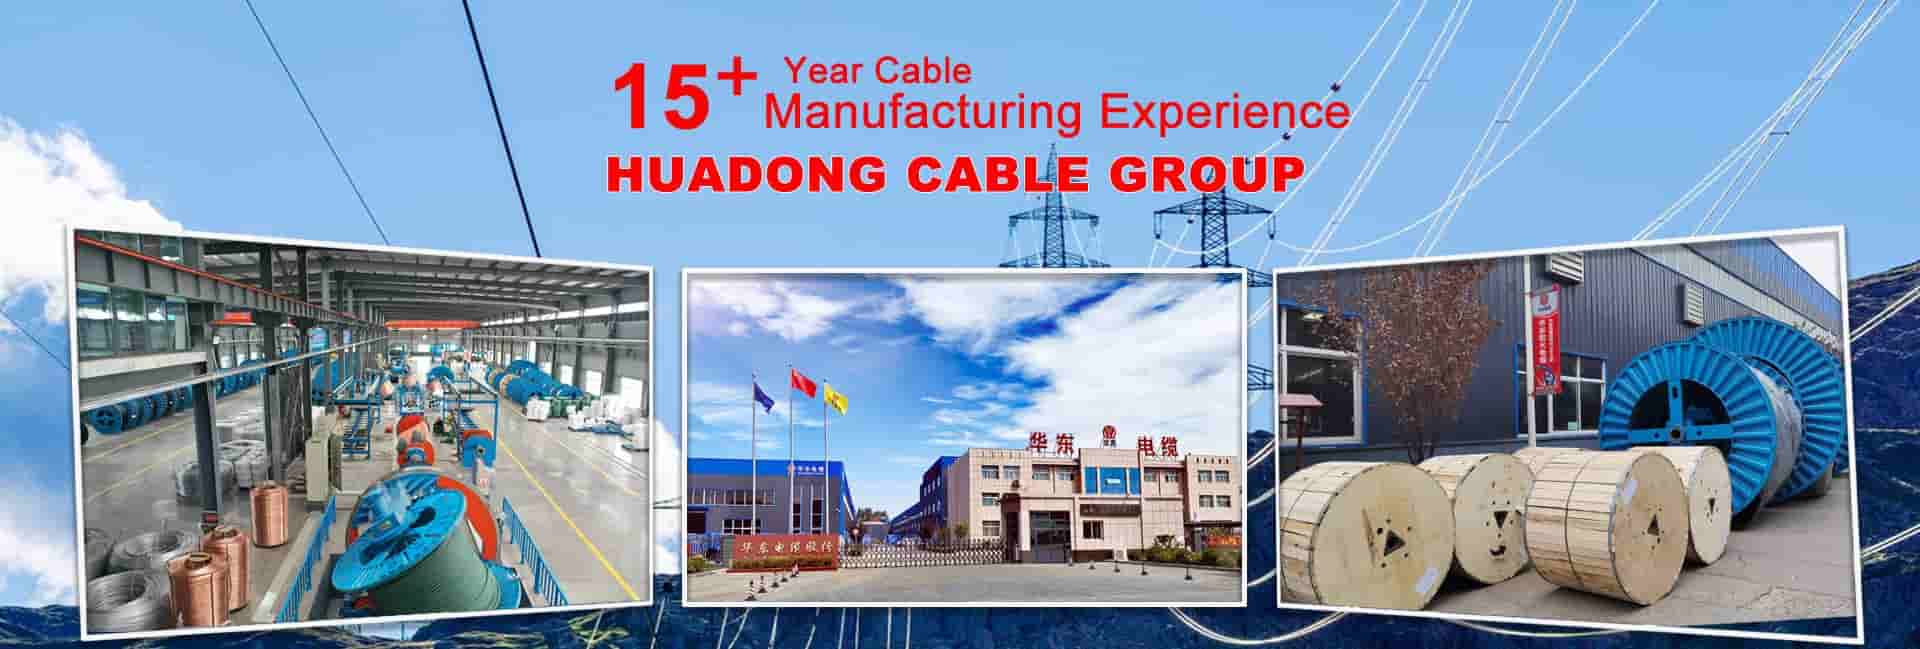 huadong cable group